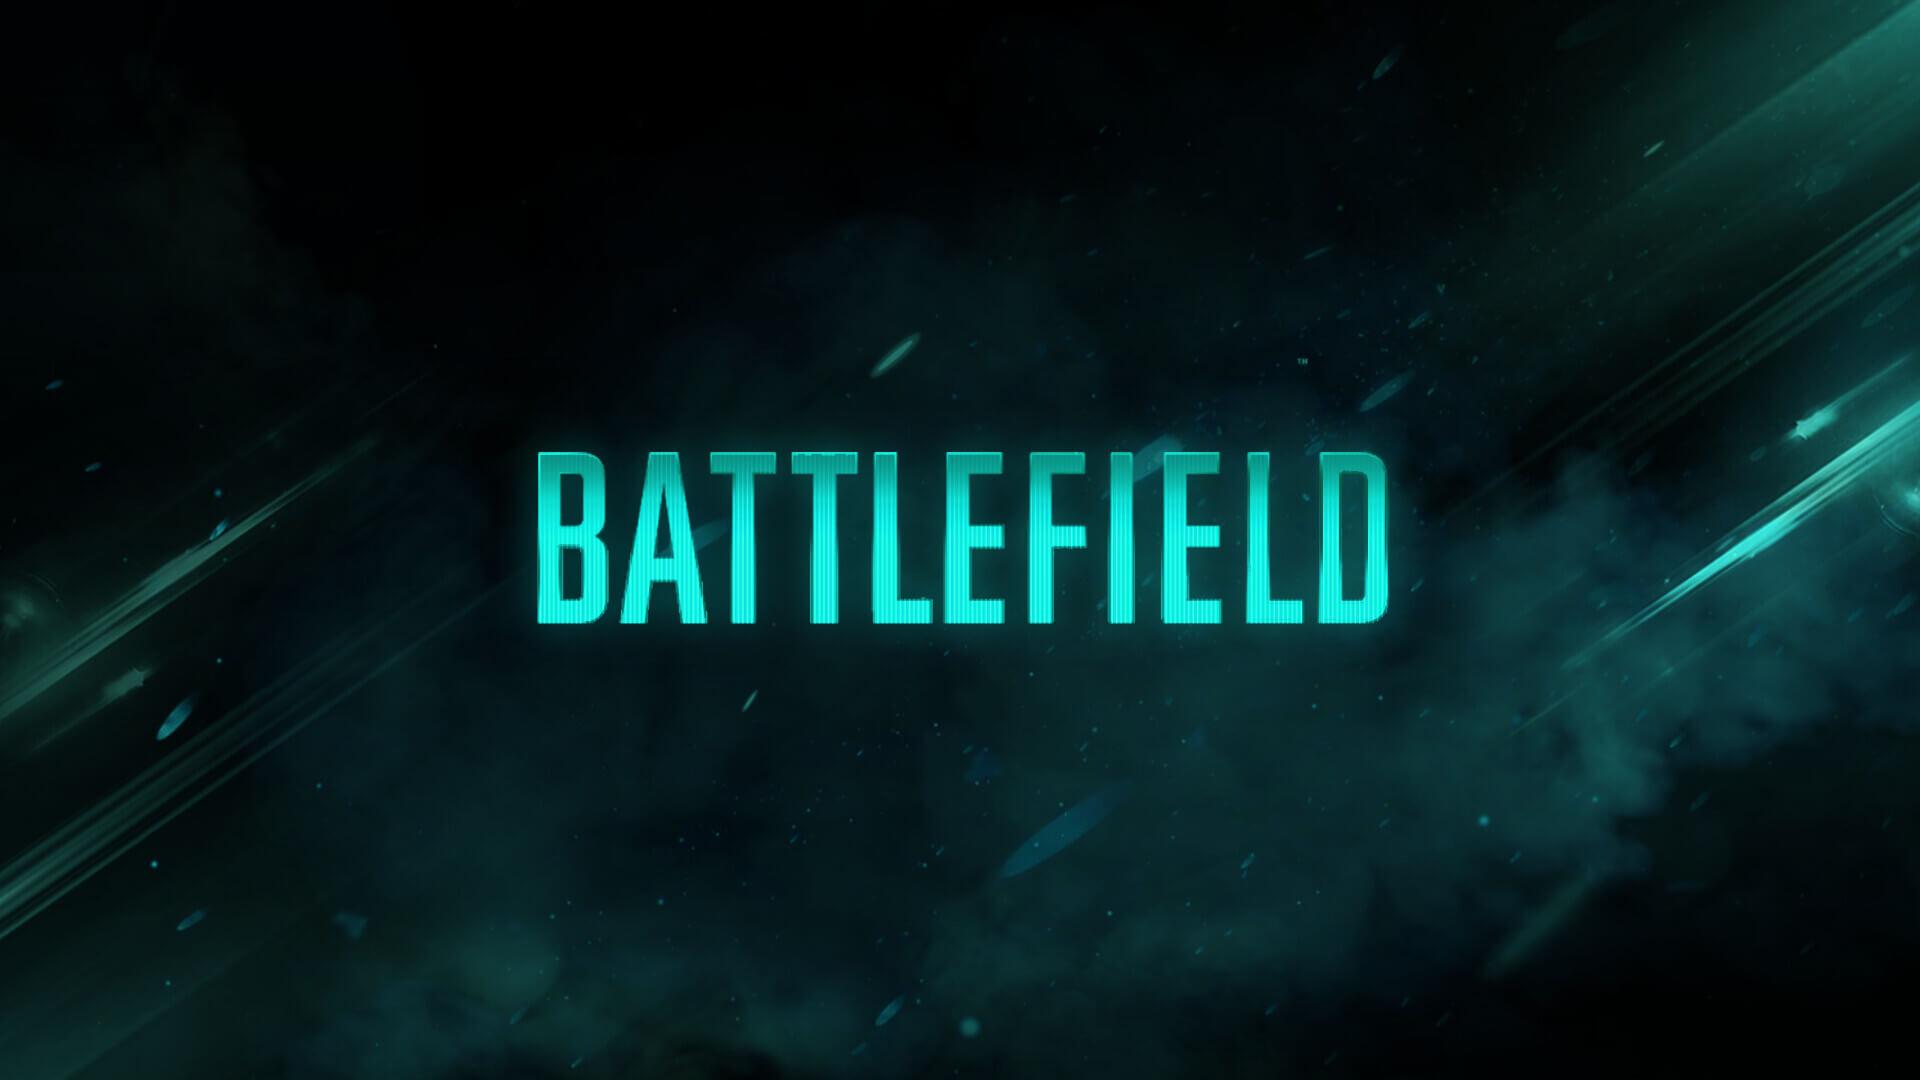 Battlefield 2021 teasers